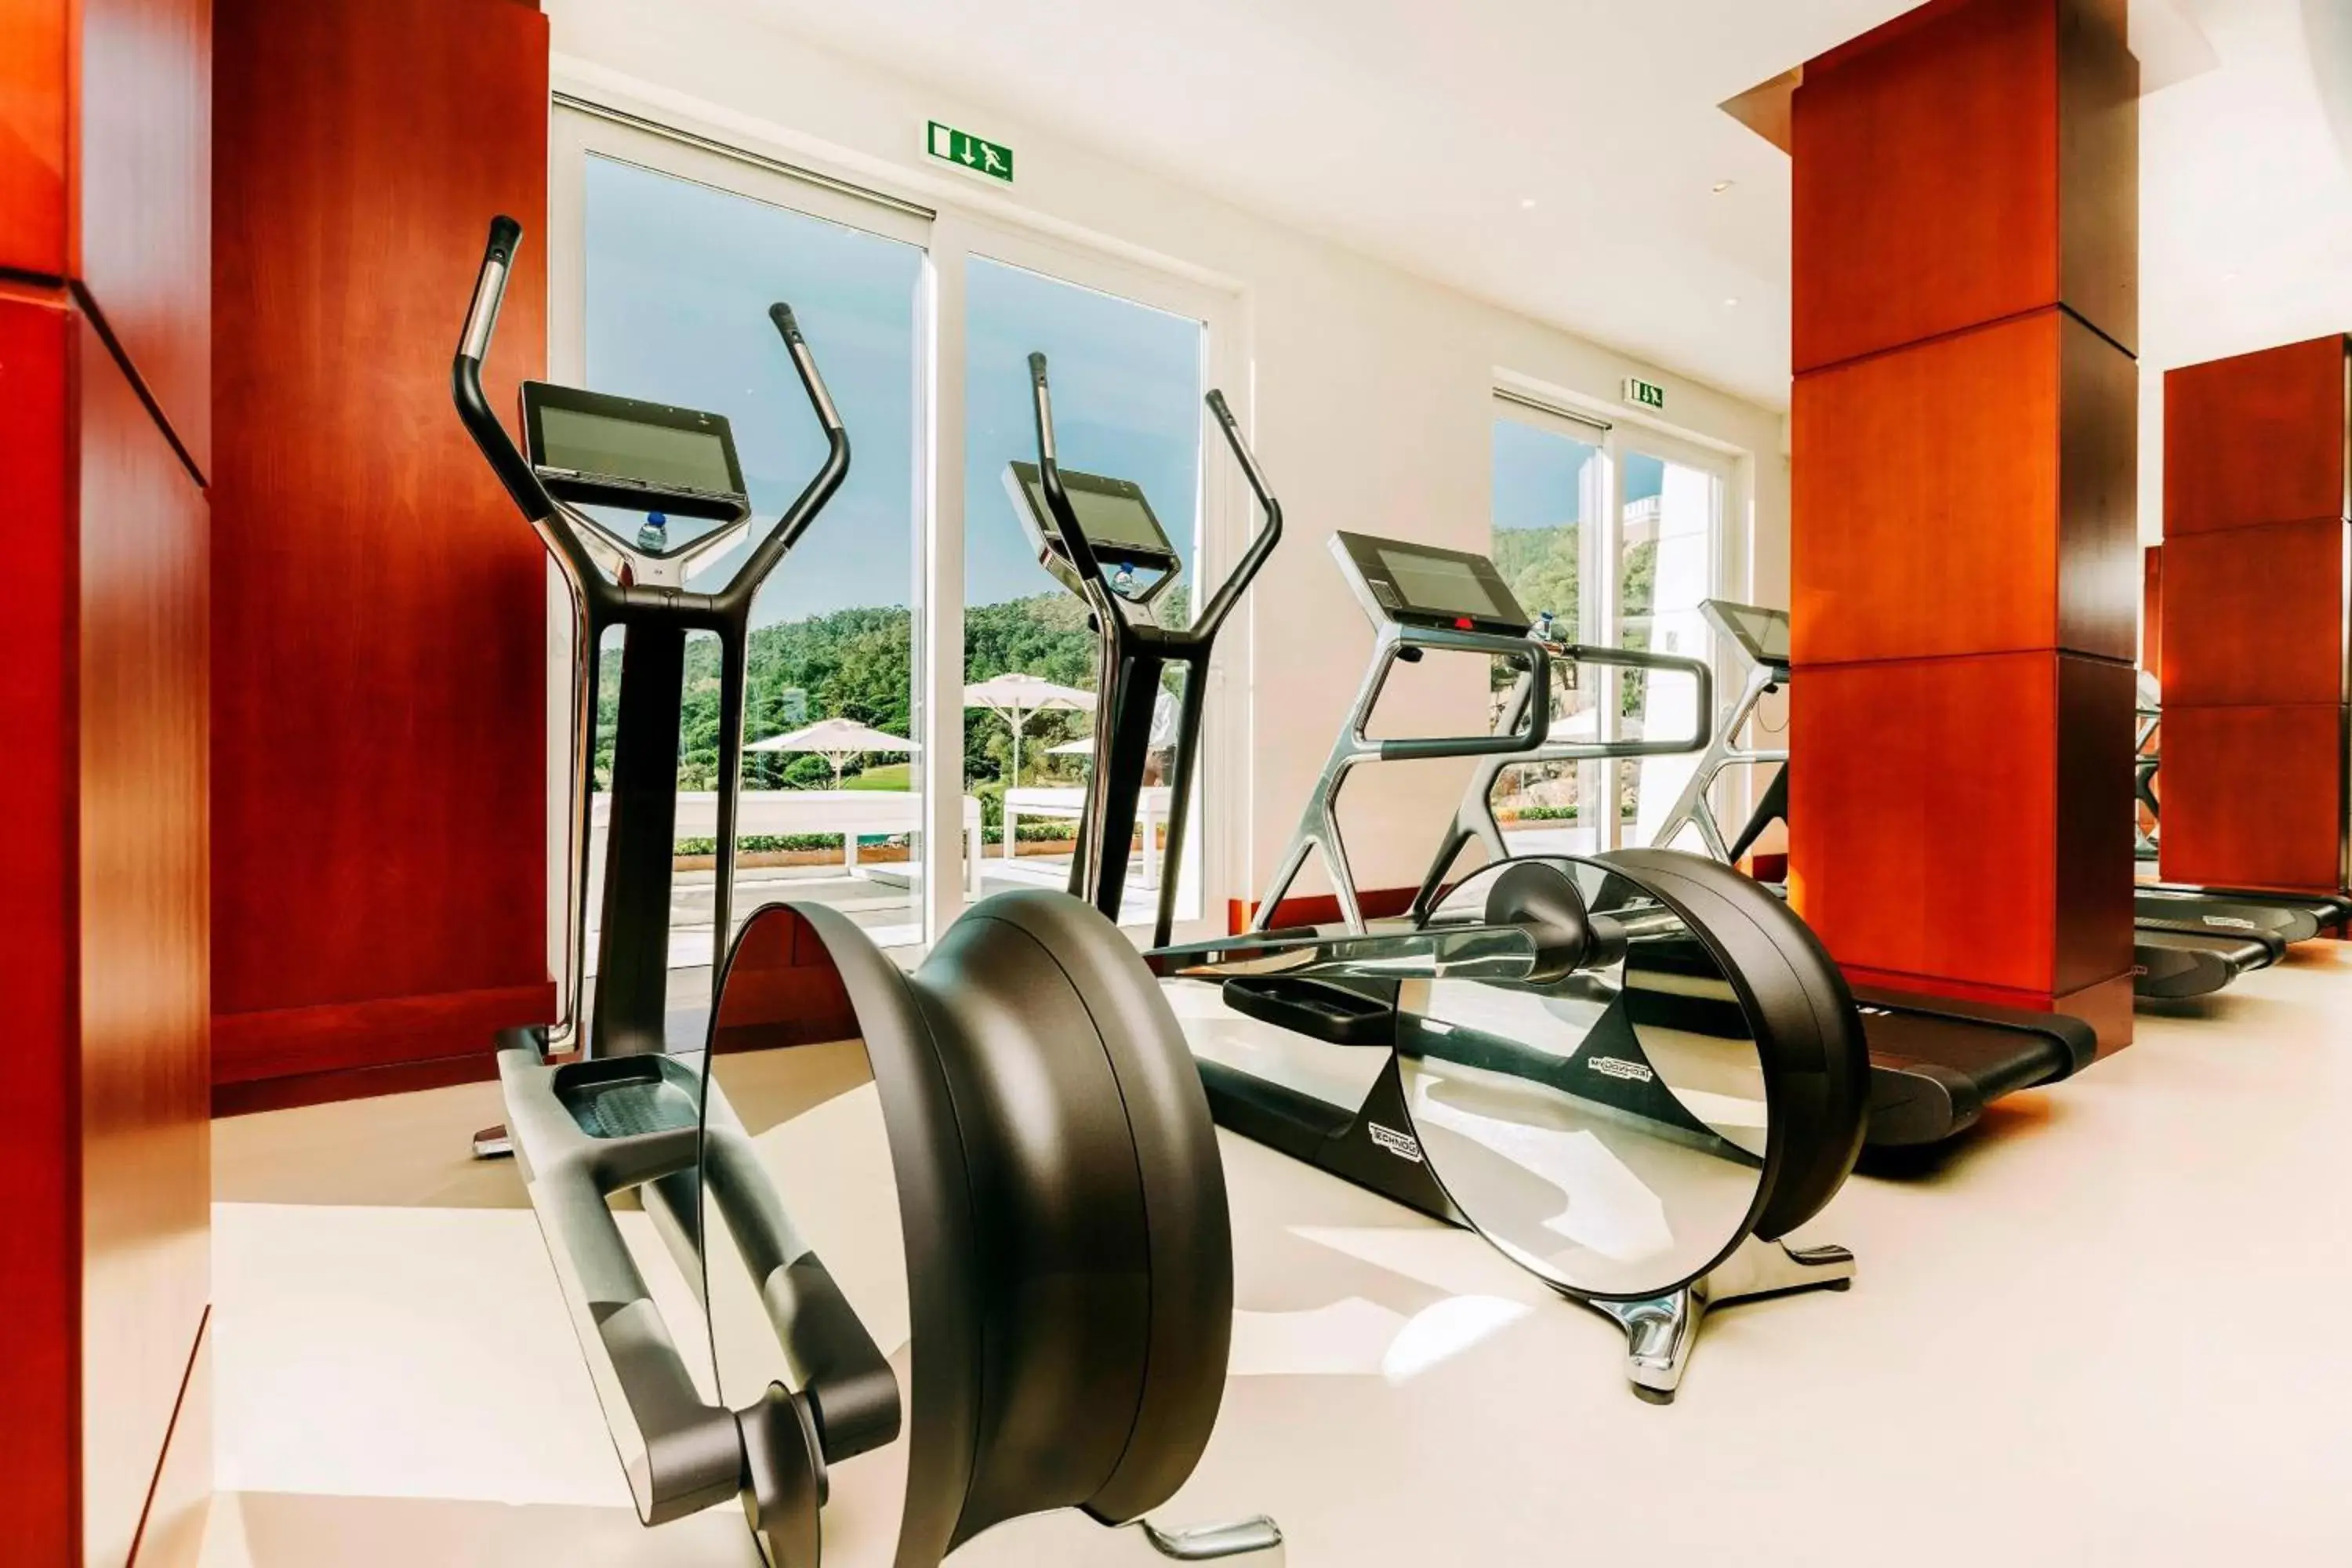 Fitness centre/facilities, Fitness Center/Facilities in Penha Longa Resort